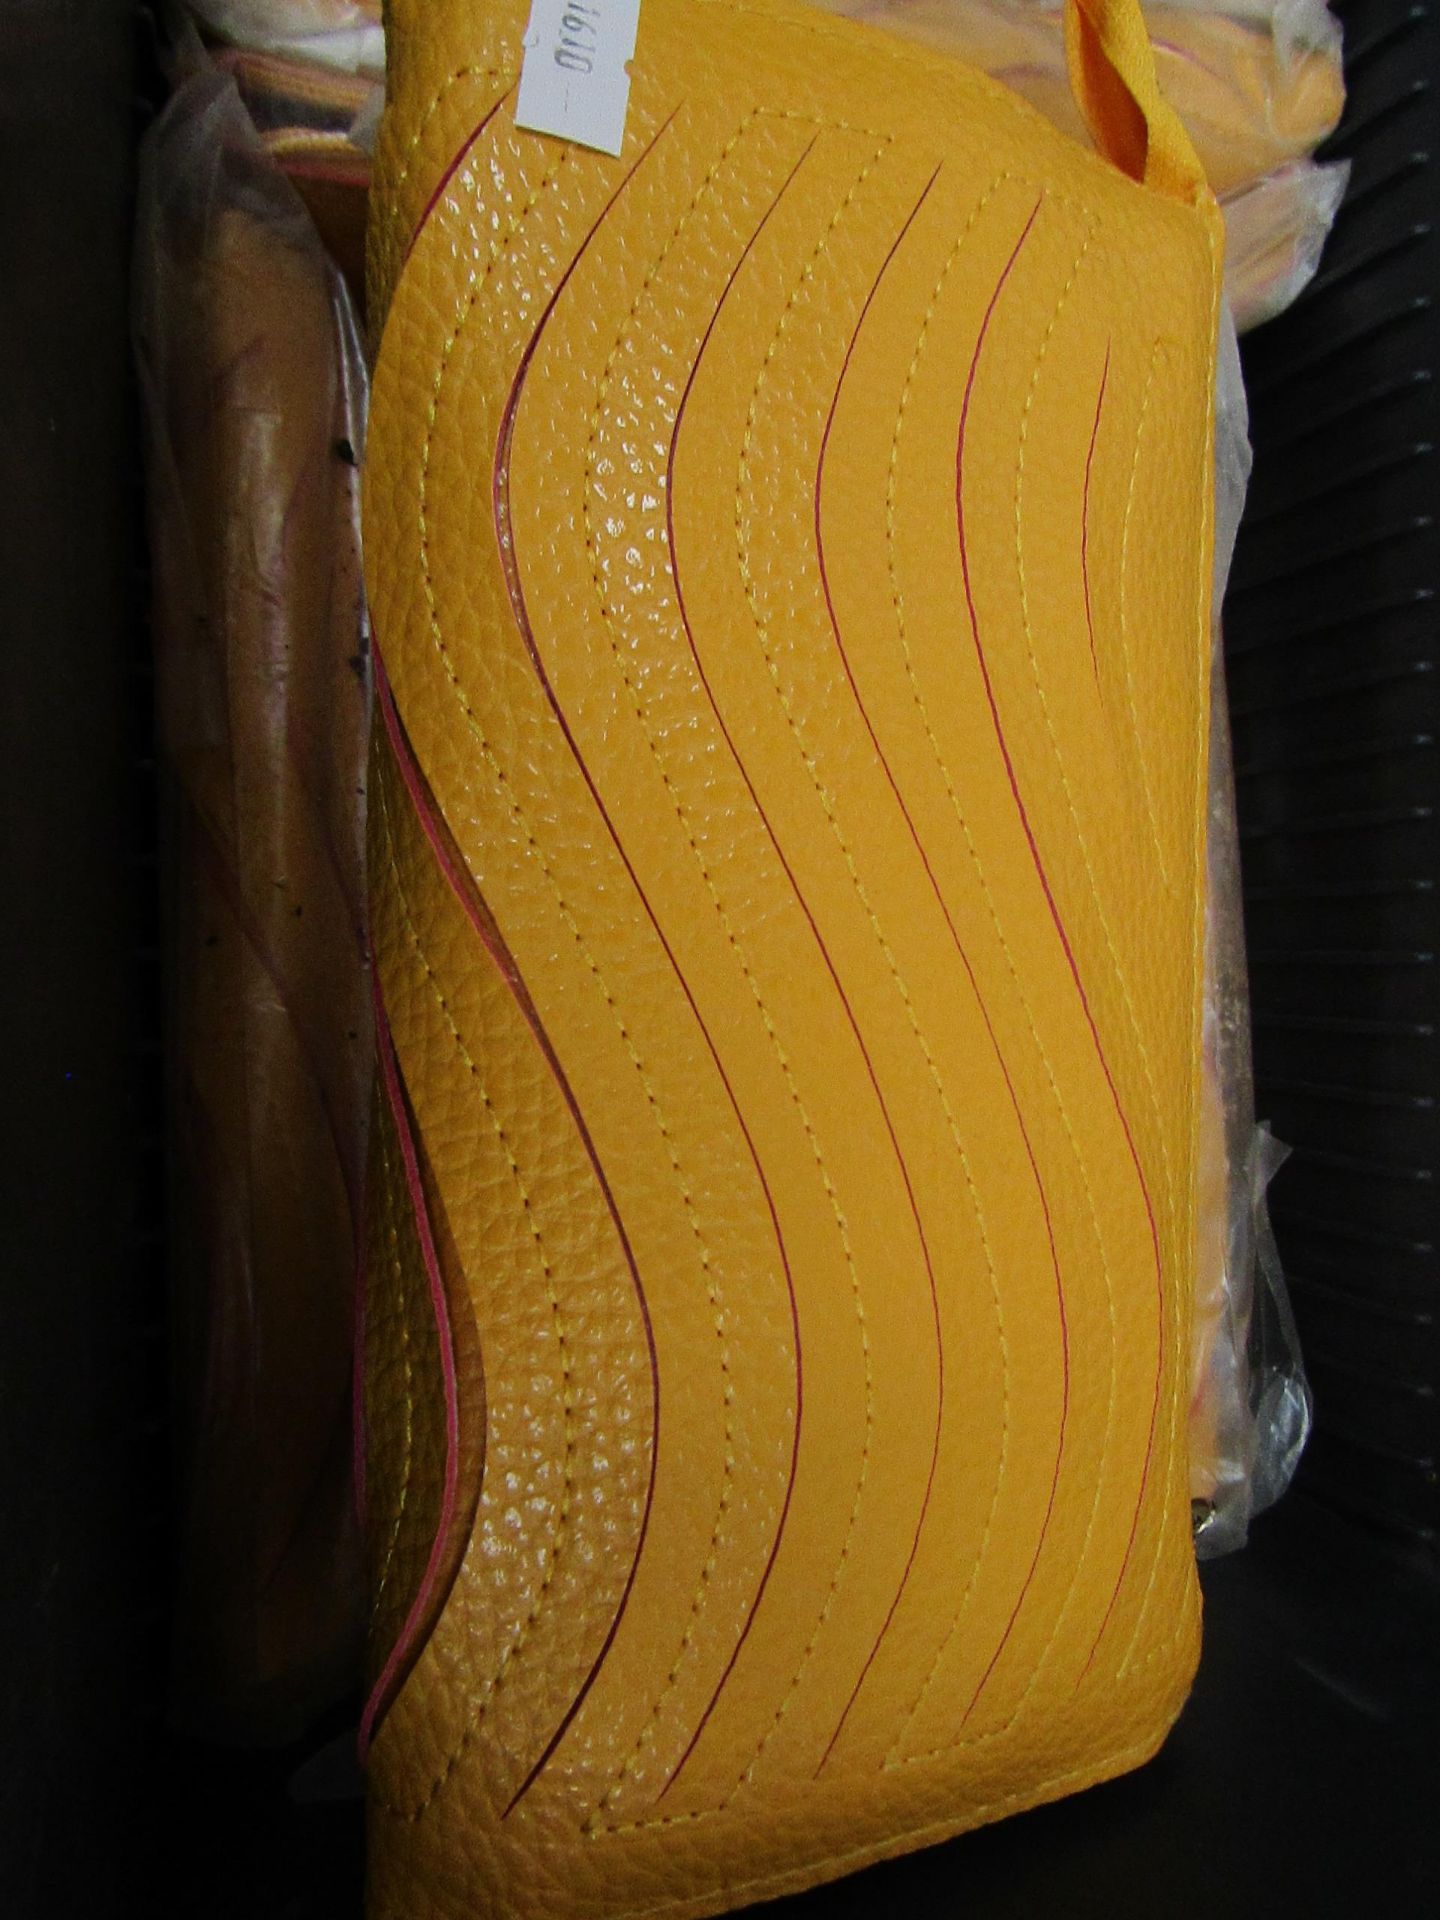 4x Yellow Clutch Purse with Handbag Strap - New & Sealed